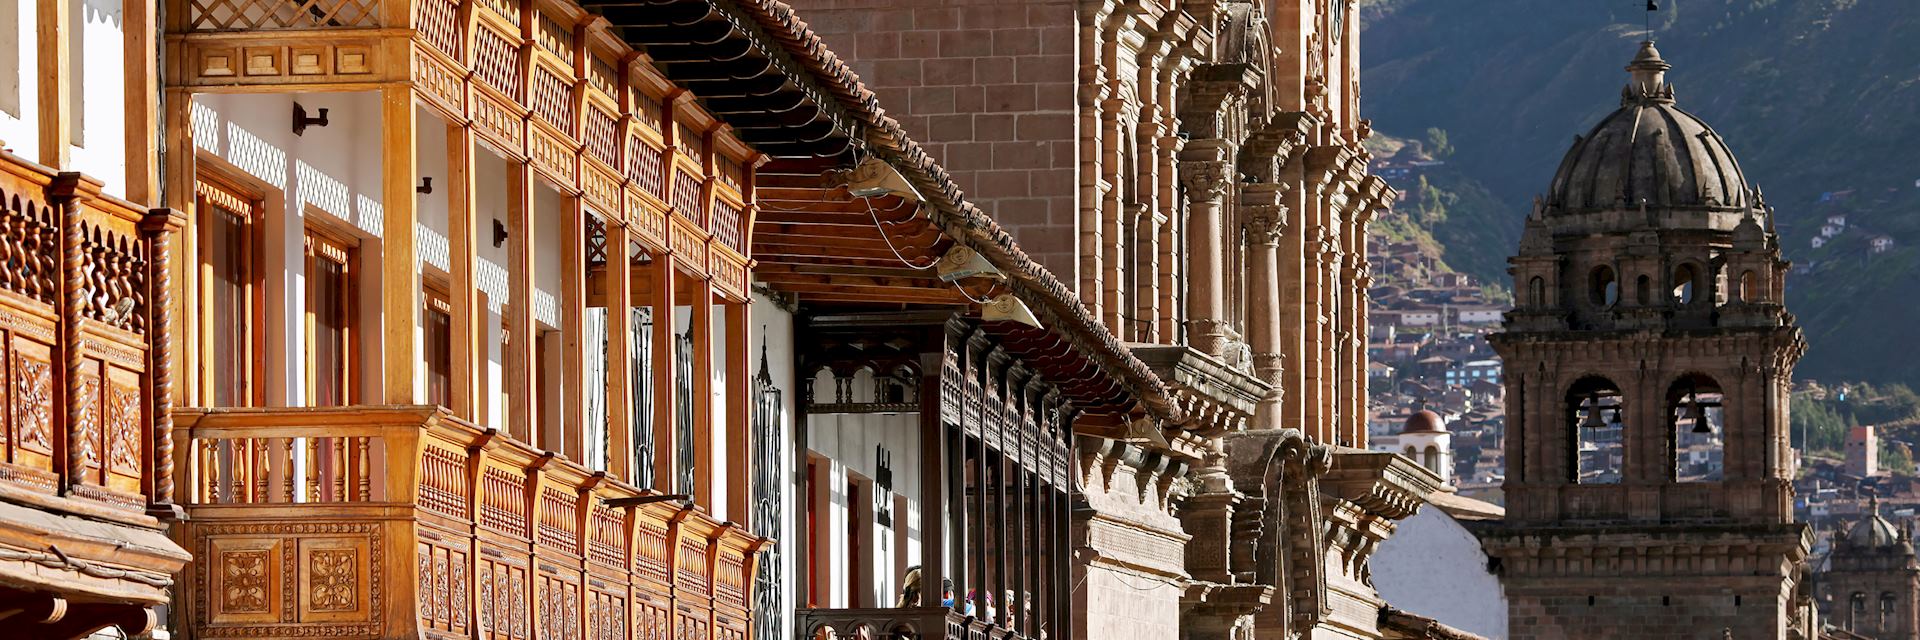 Old buildings in Cuzco